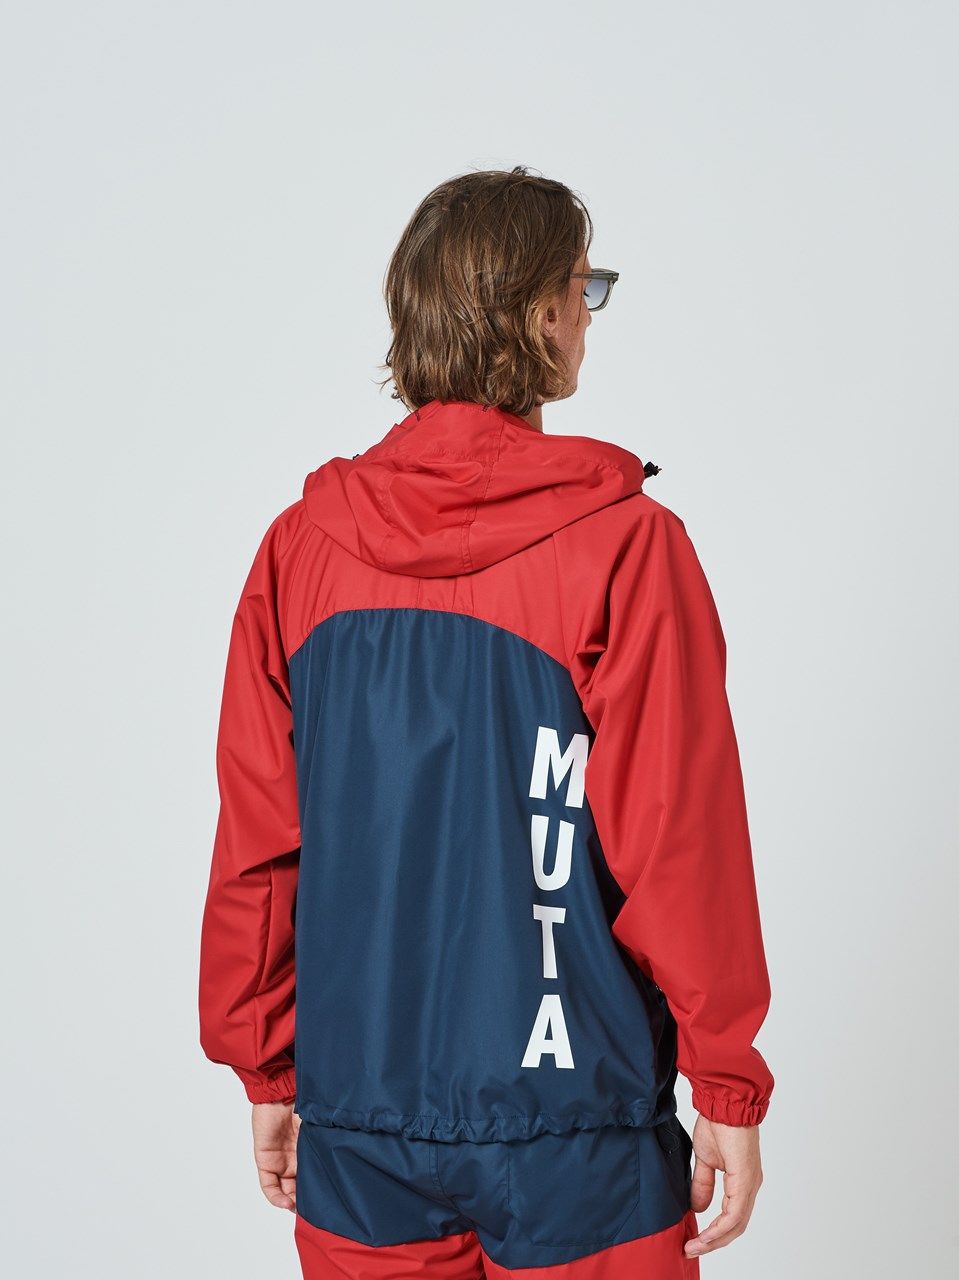 muta - (予約品) muta Light Shell Hooded Jacket / フードジャケット